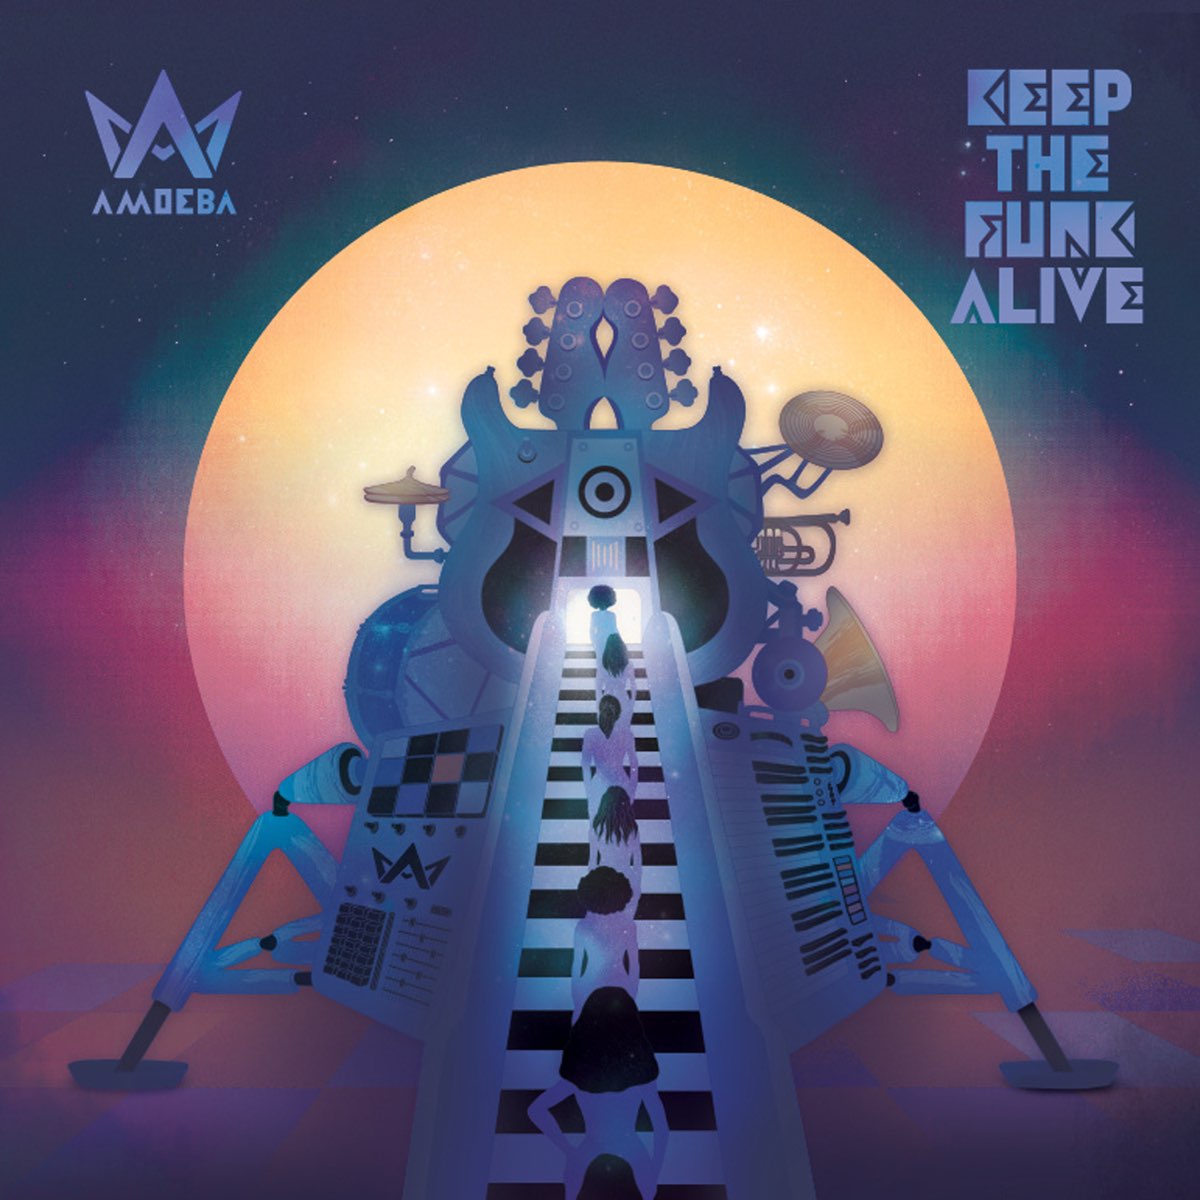 Keep the Funk Alive by Amoeba on Apple Music